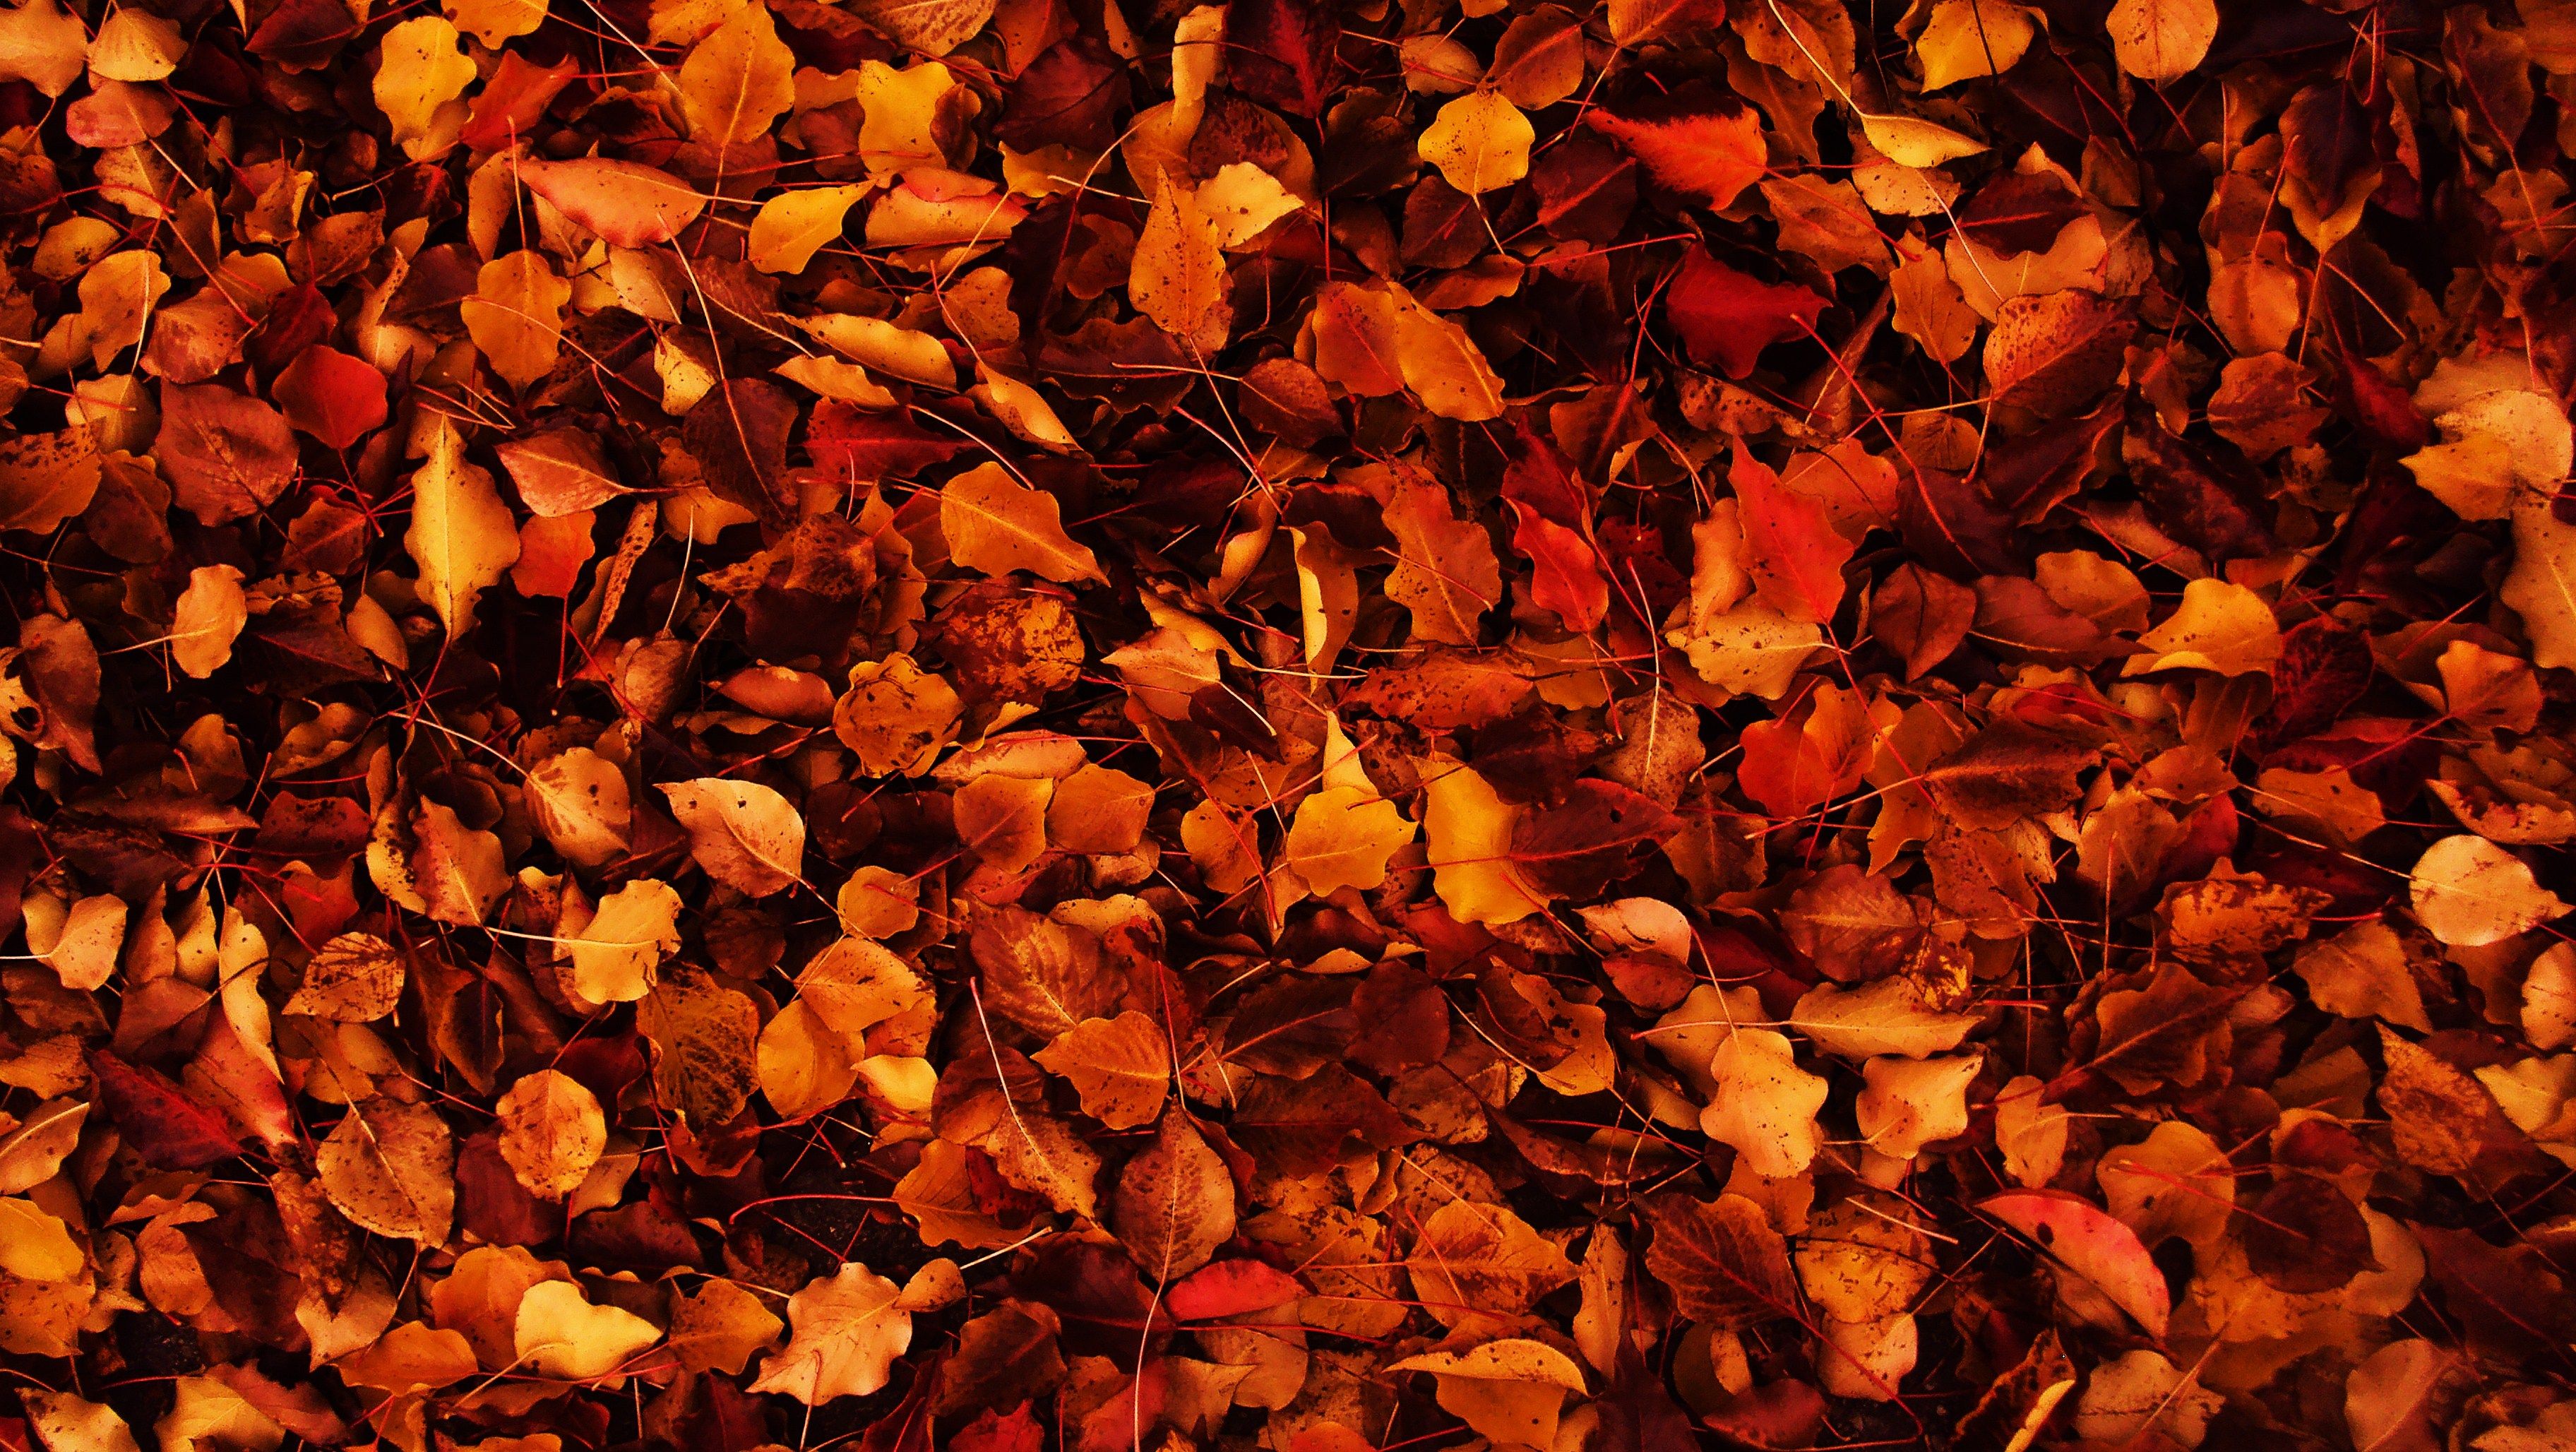 search?q=autumn road. Thanksgiving wallpaper, Tumblr wallpaper, Autumn leaves